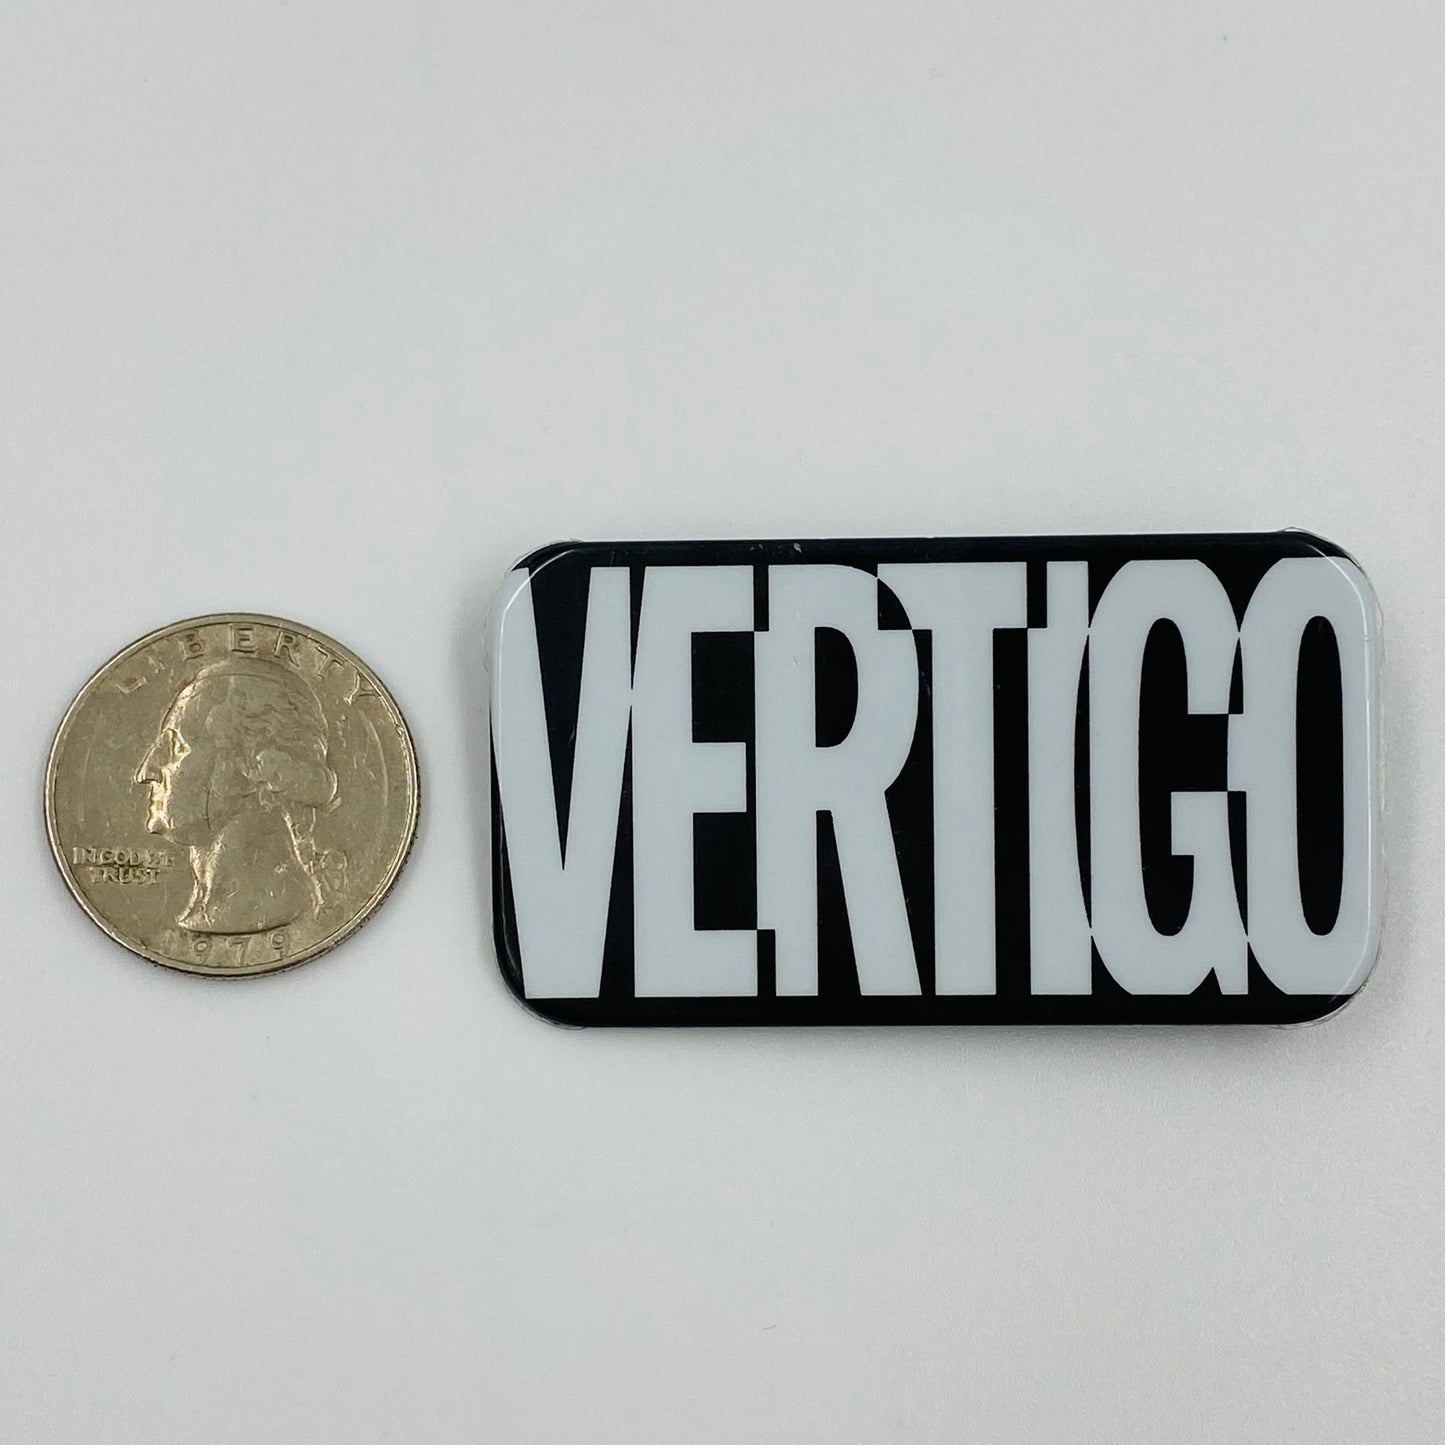 Vertigo Comics promo pinback button (1996)